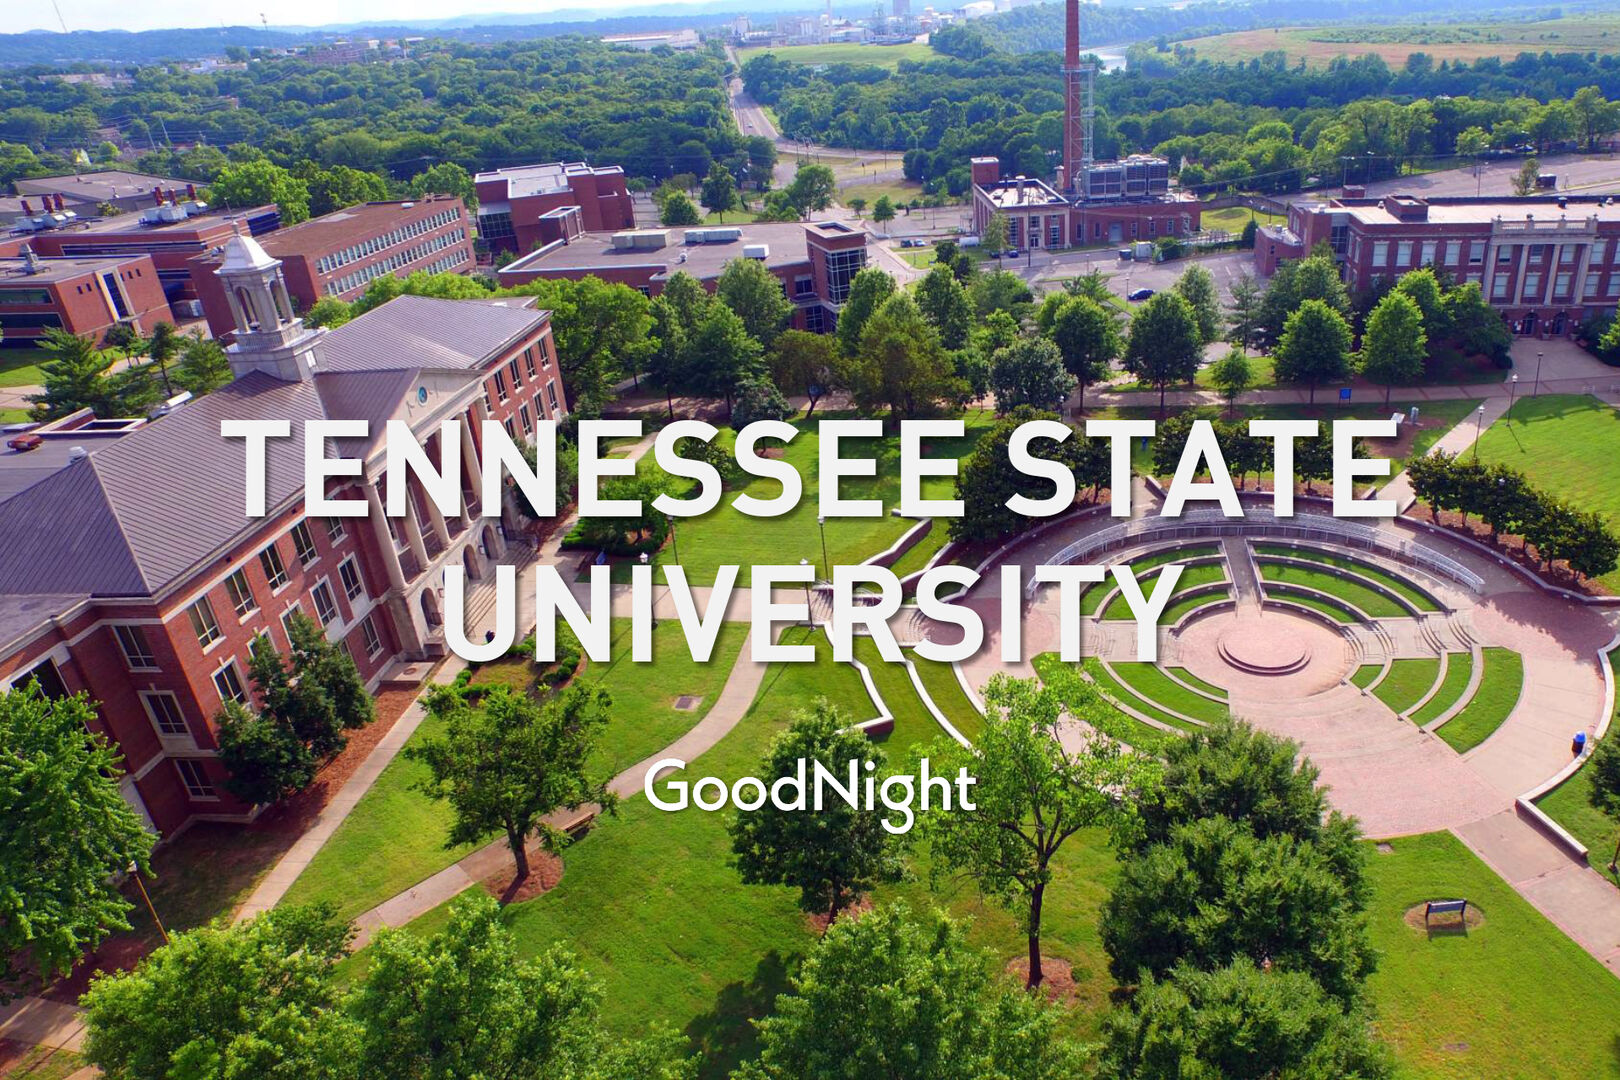 4 mins: Tennessee State University